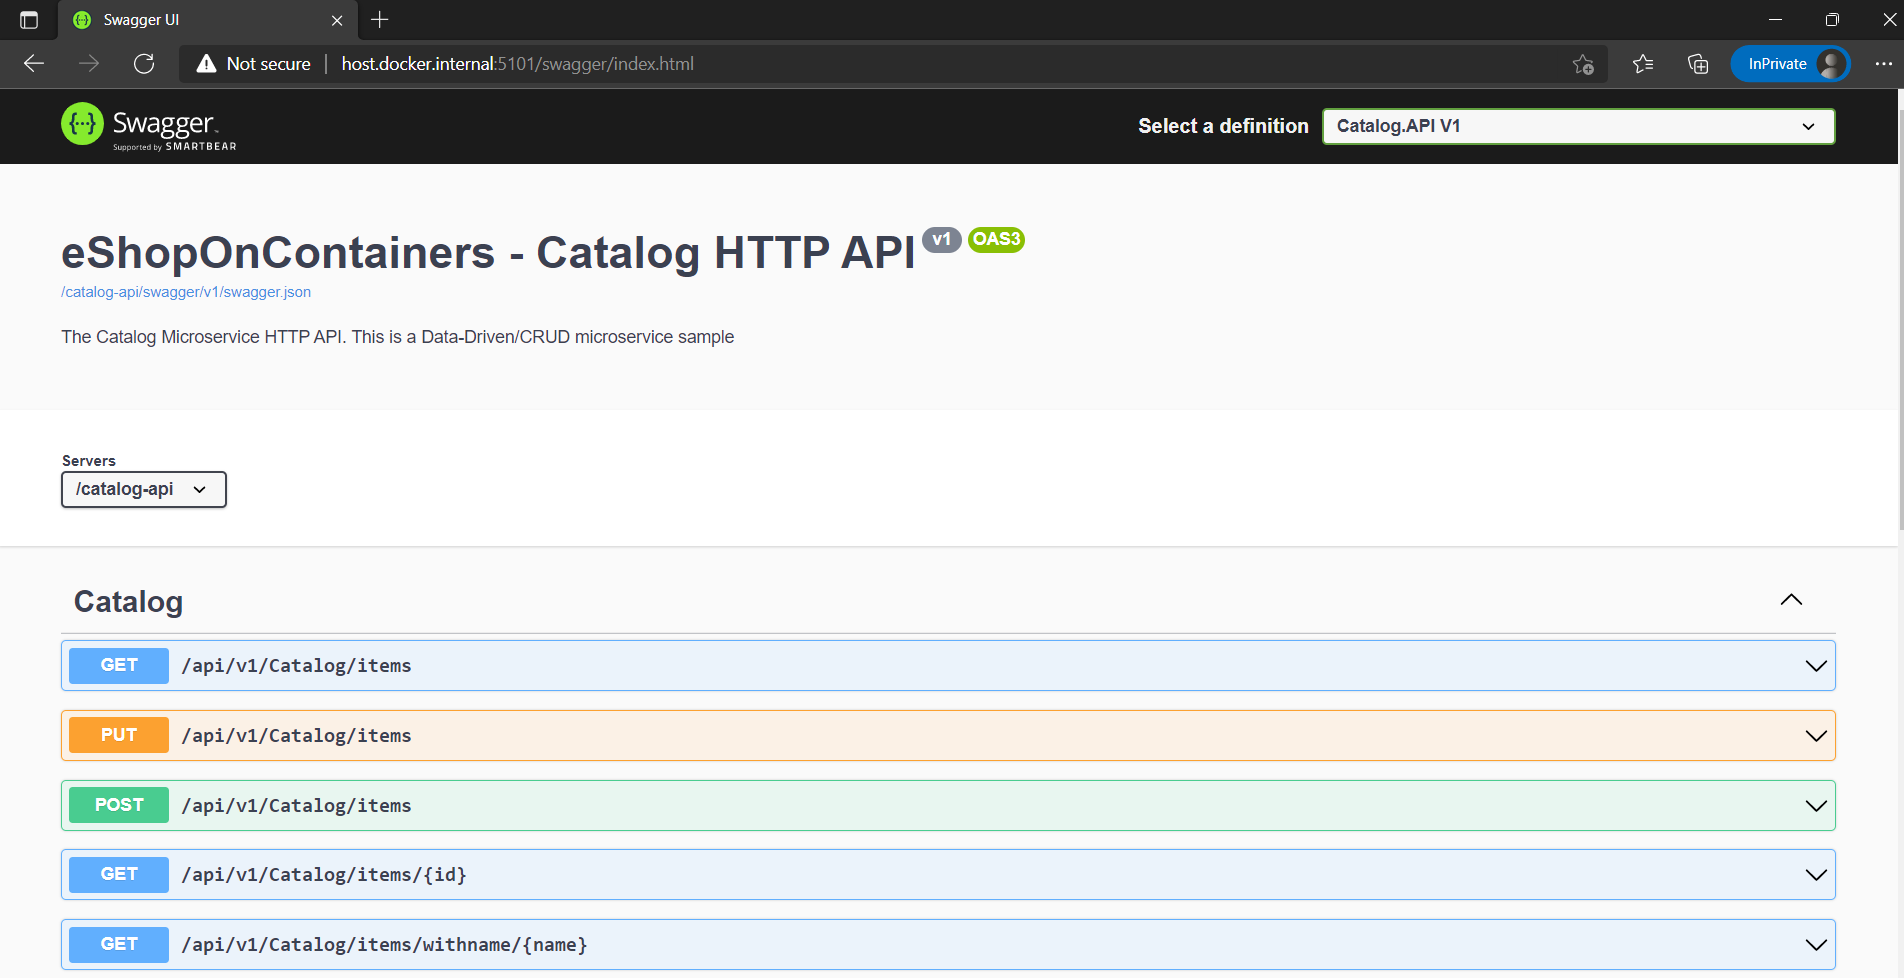 Screenshot of Swagger API Explorer displaying eShopOContainers API.